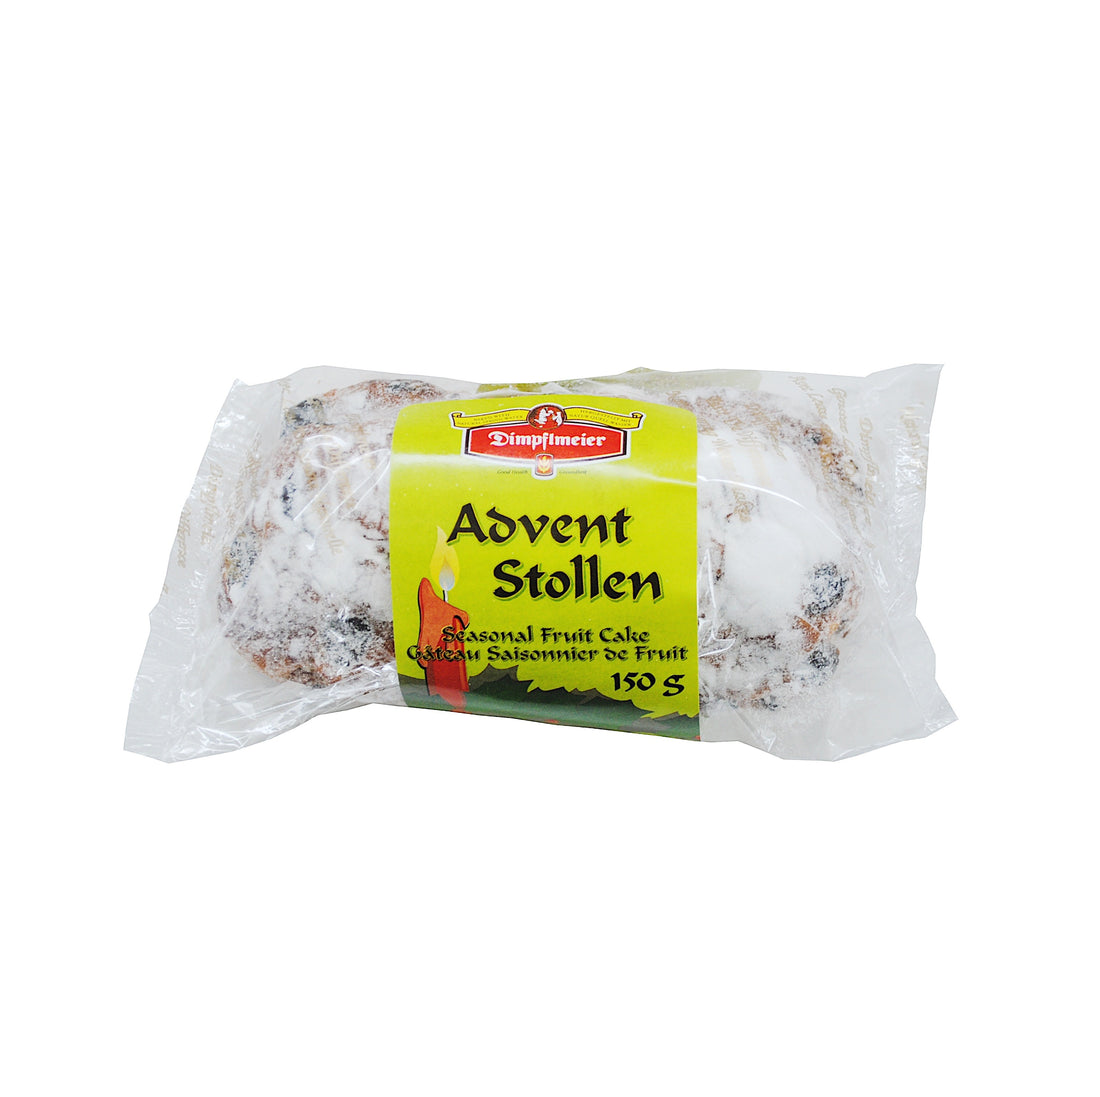 Advent Stollen- Seasonal Fruit Cake (150 g.)